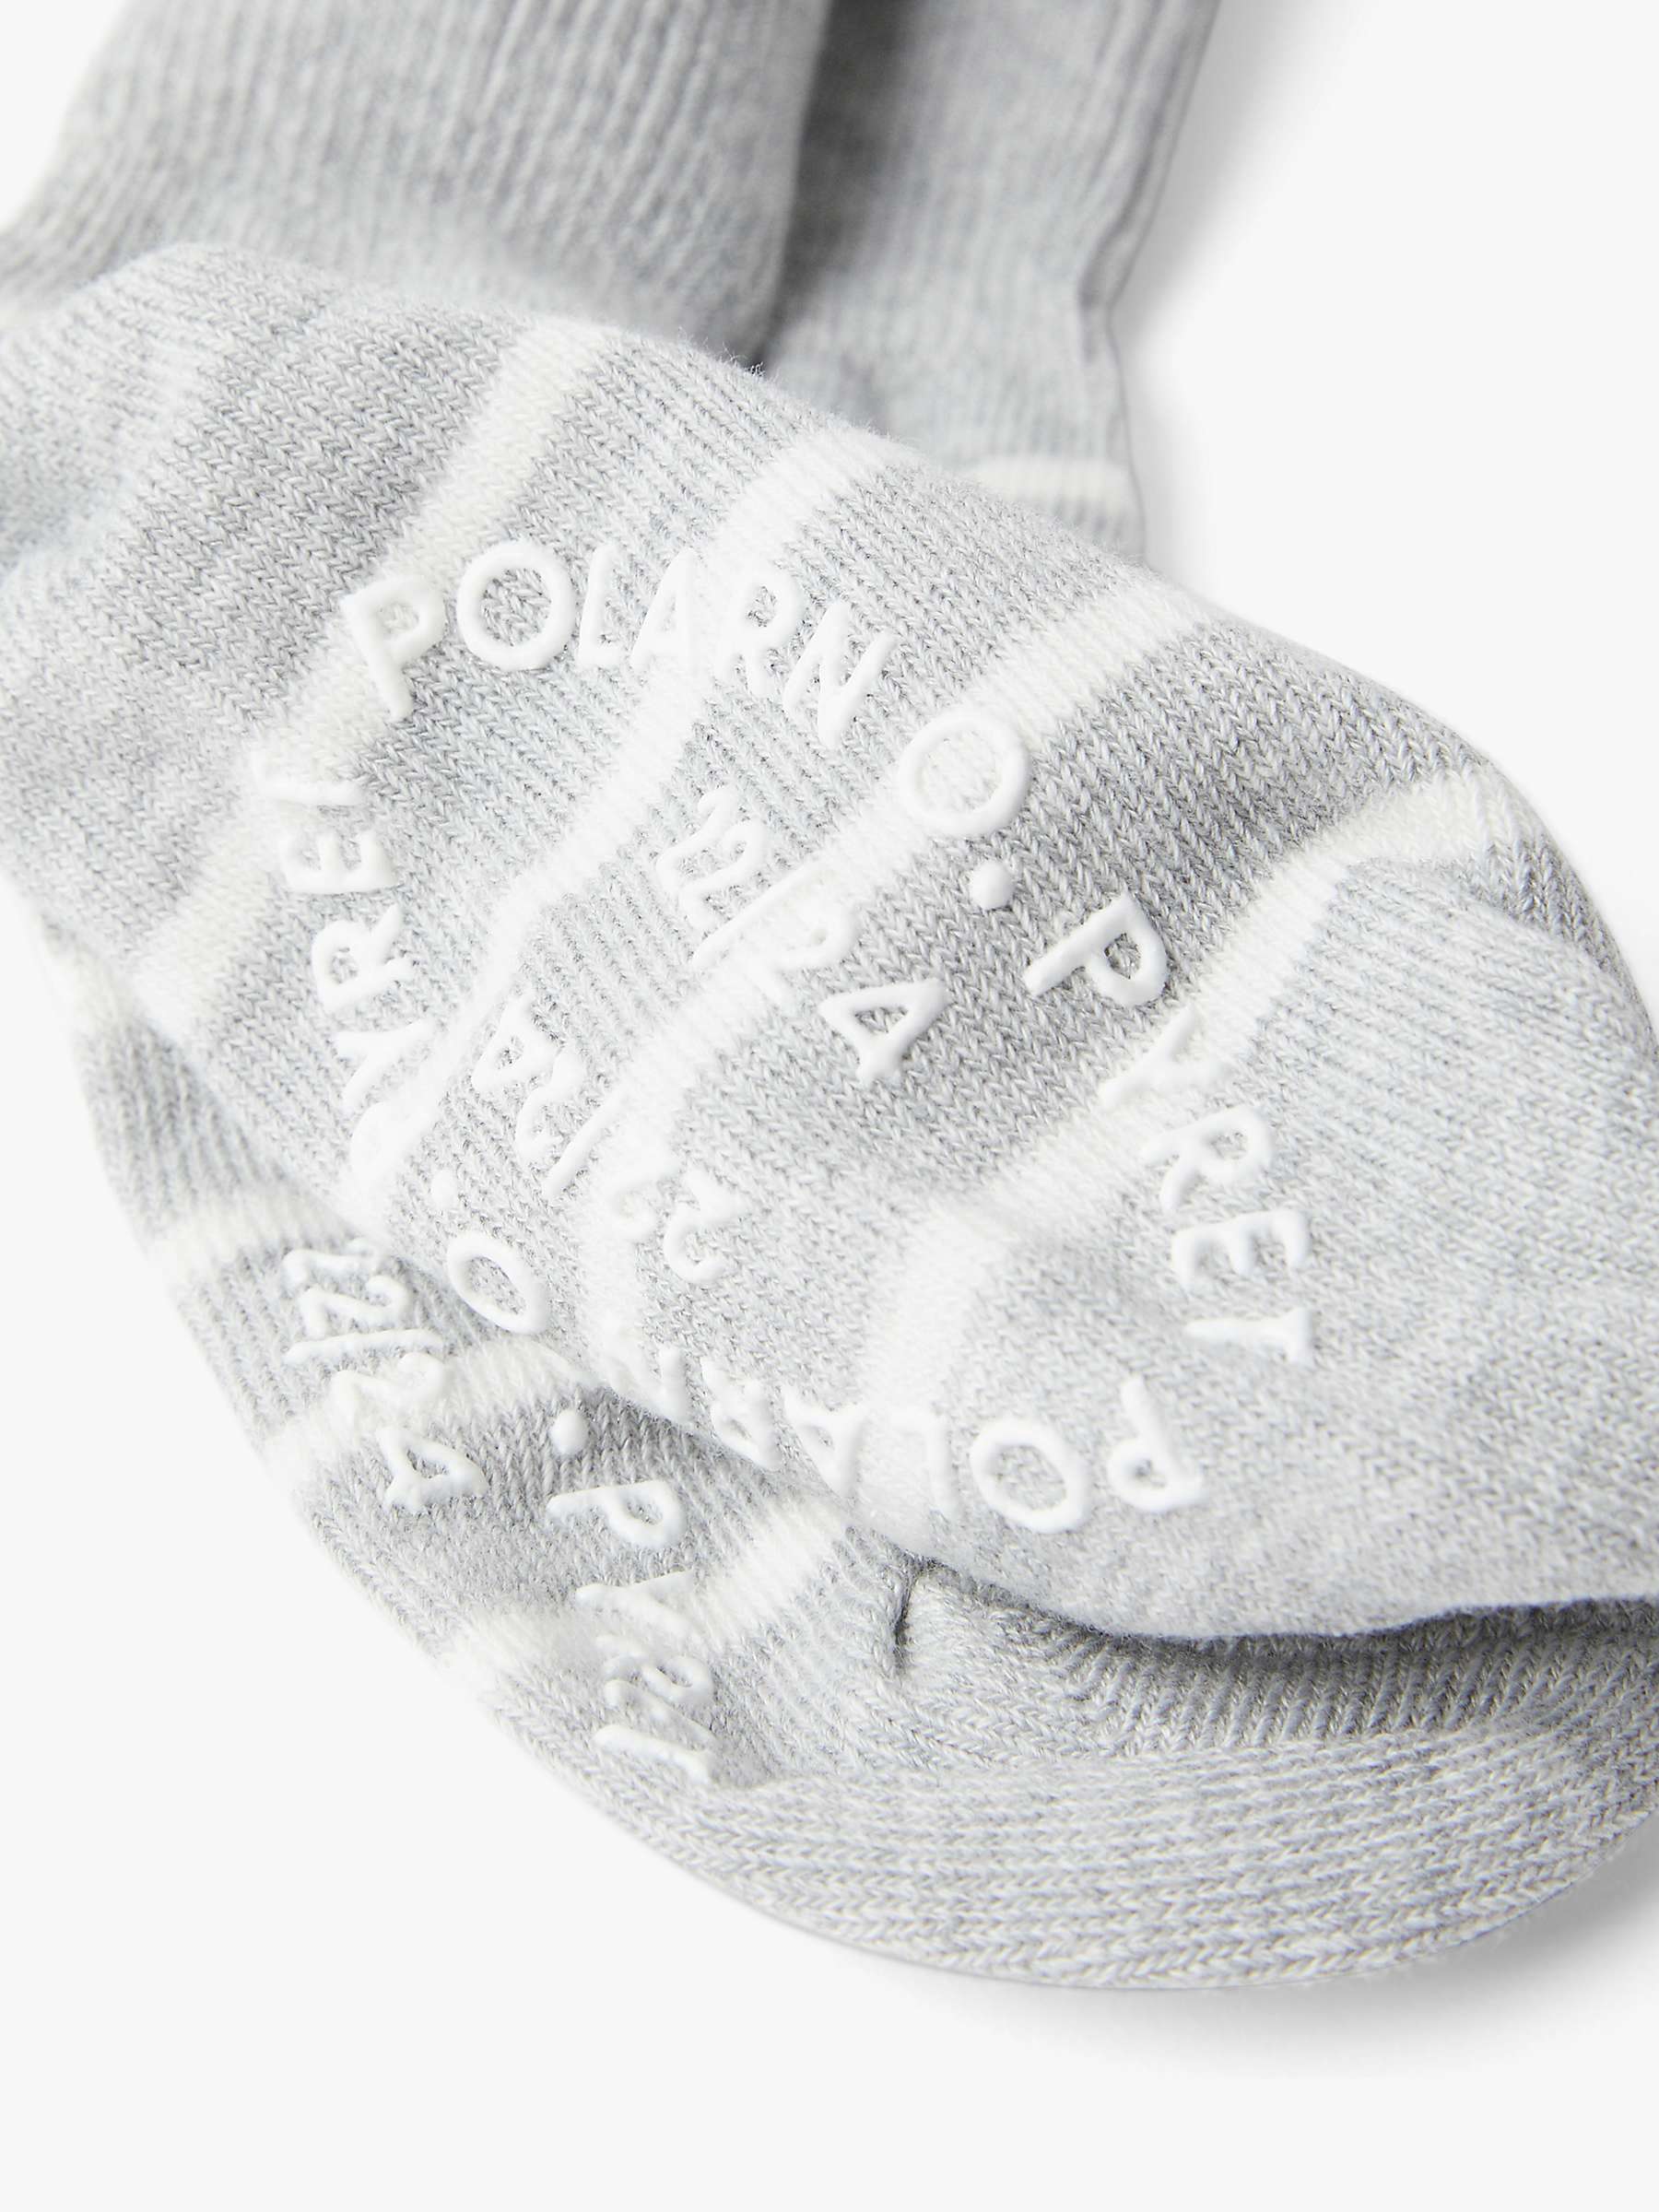 Buy Polarn O. Pyret Baby Cotton Blend Antislip Stripe Socks, Pack of 2, Grey Online at johnlewis.com